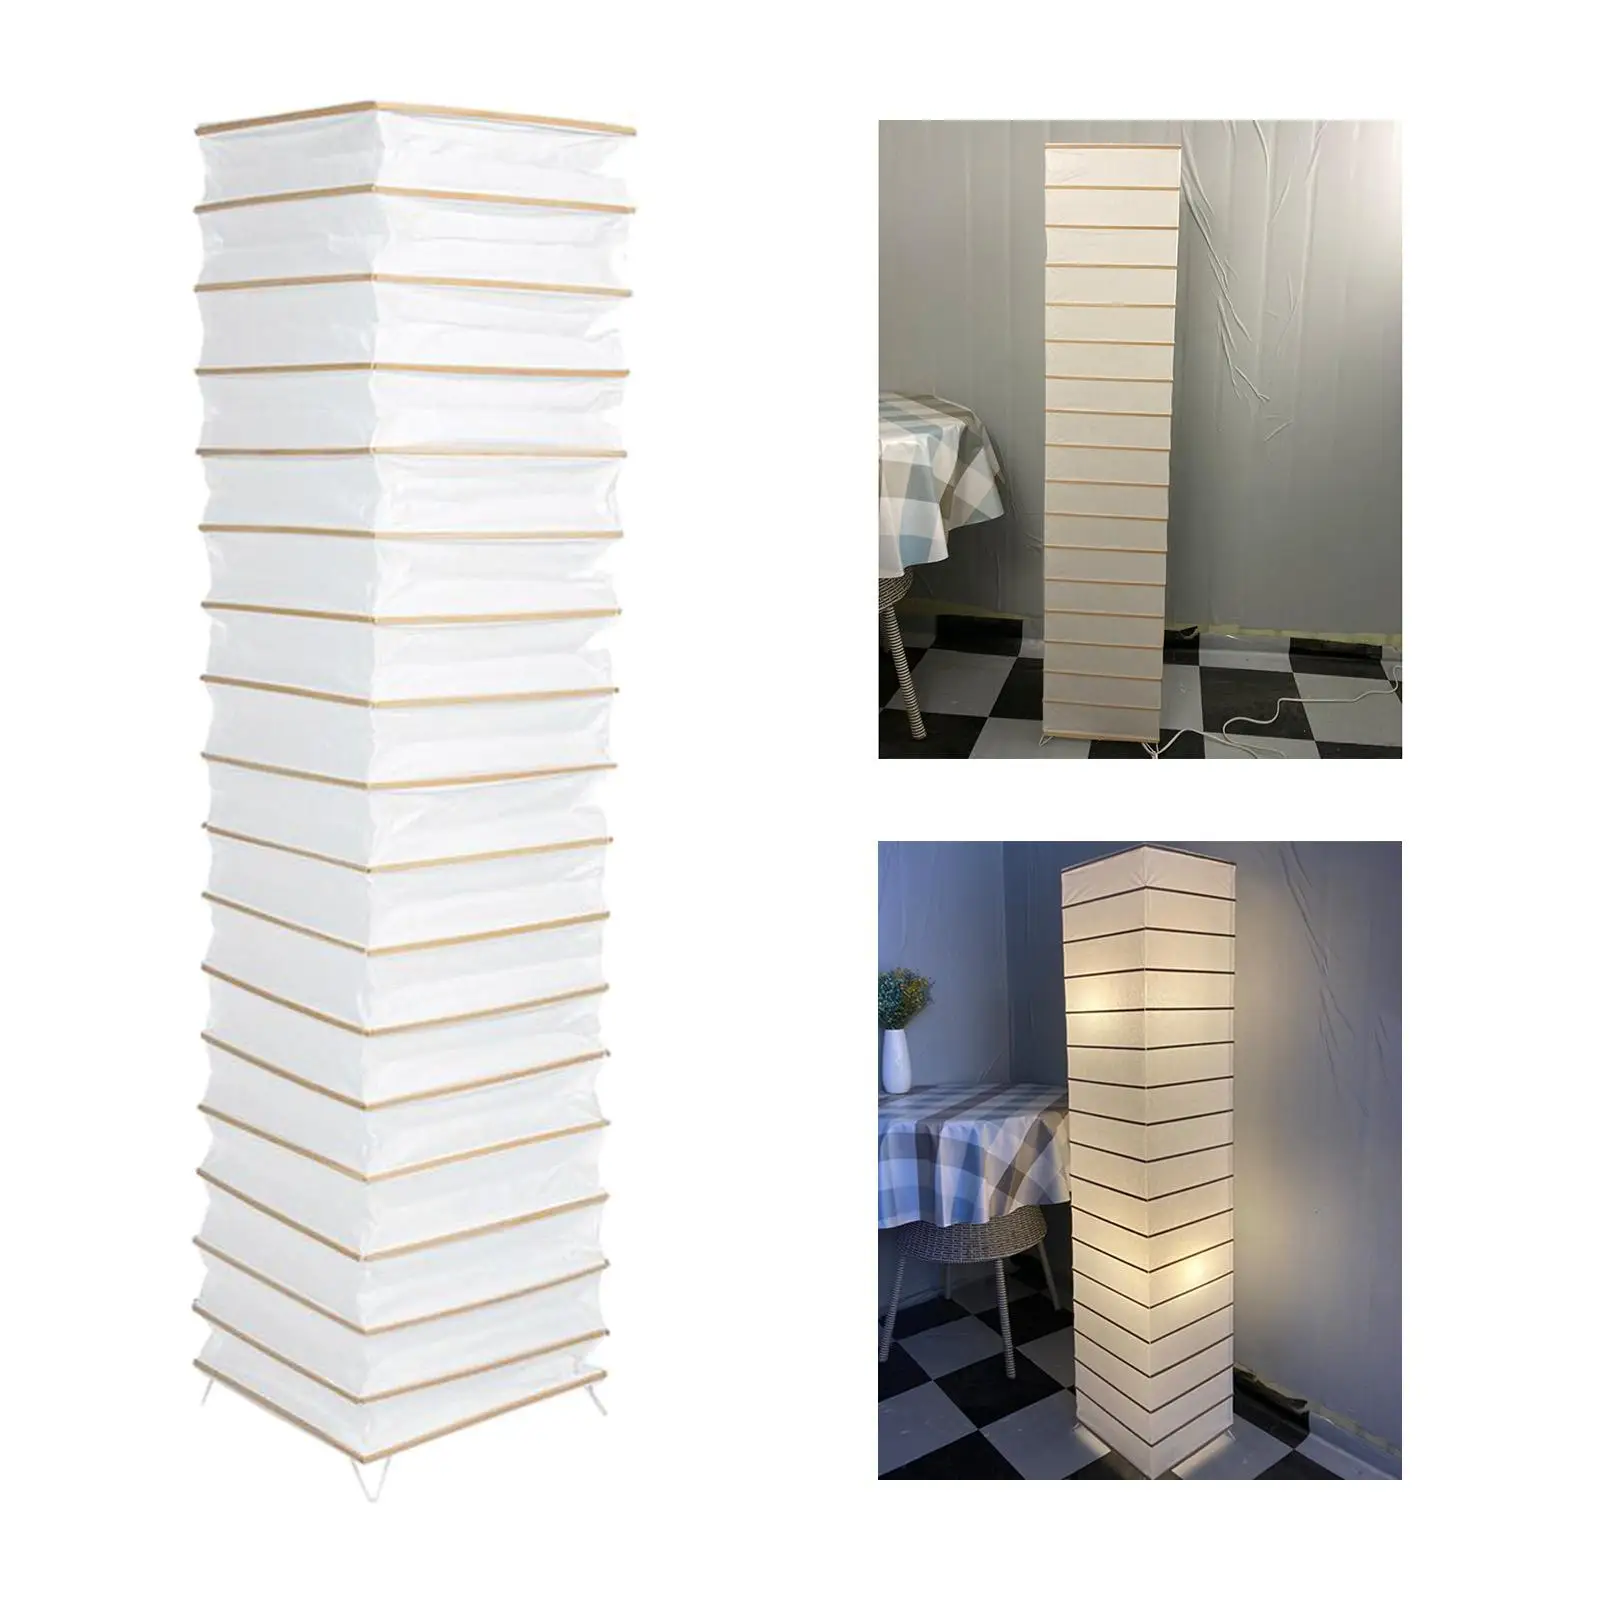 NightStand Floor Lamp Paper Shade, Great for Weddings, Anniversaries Handmade Lightweight